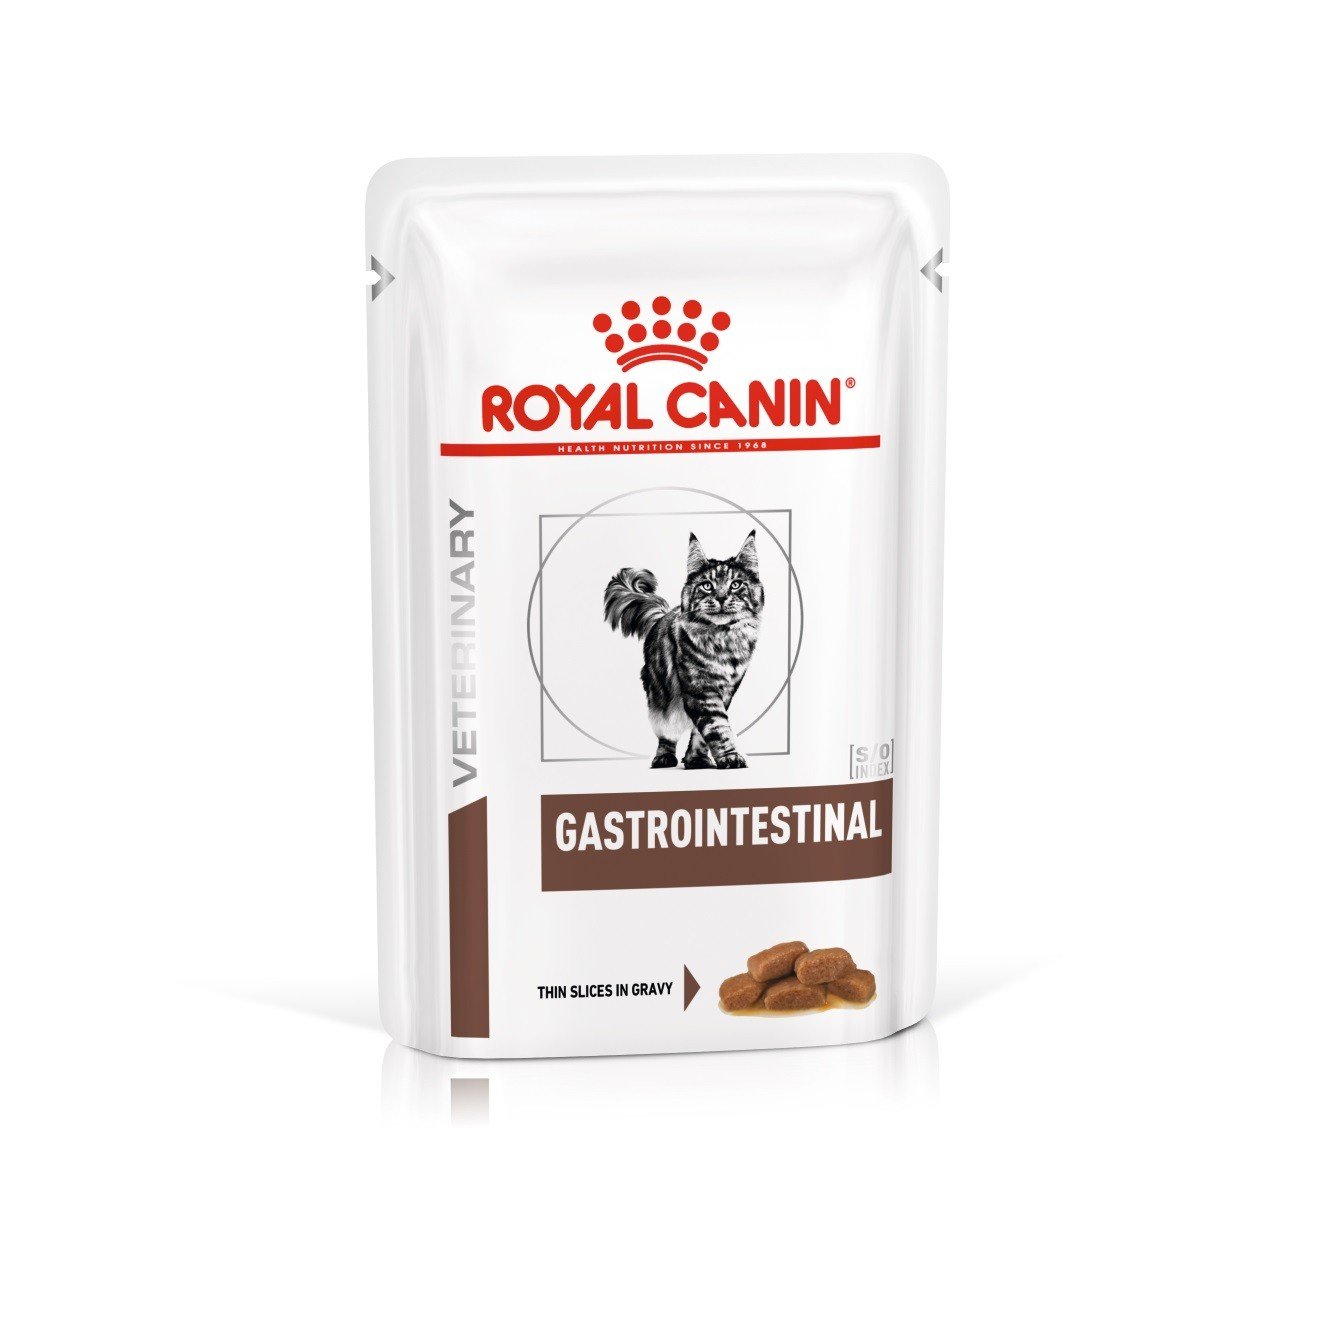 Royal Canin Veterinary Feline Gastro Intestinal in maaltijdzakjes